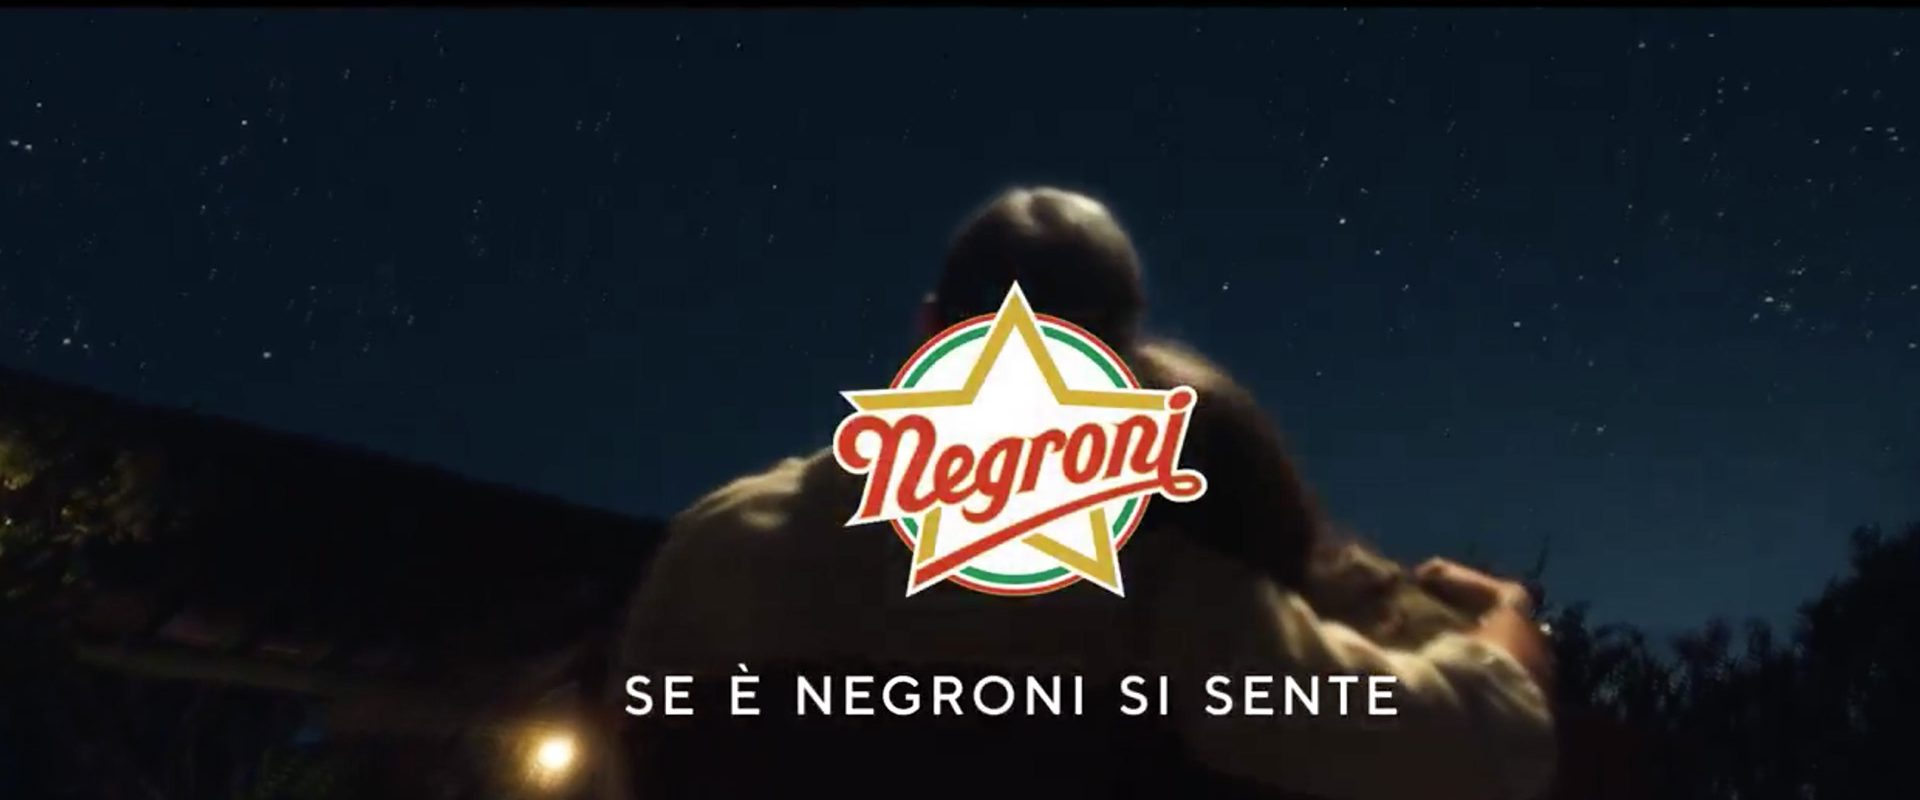 gruppo-veronesi-Spot-Negroni-2020